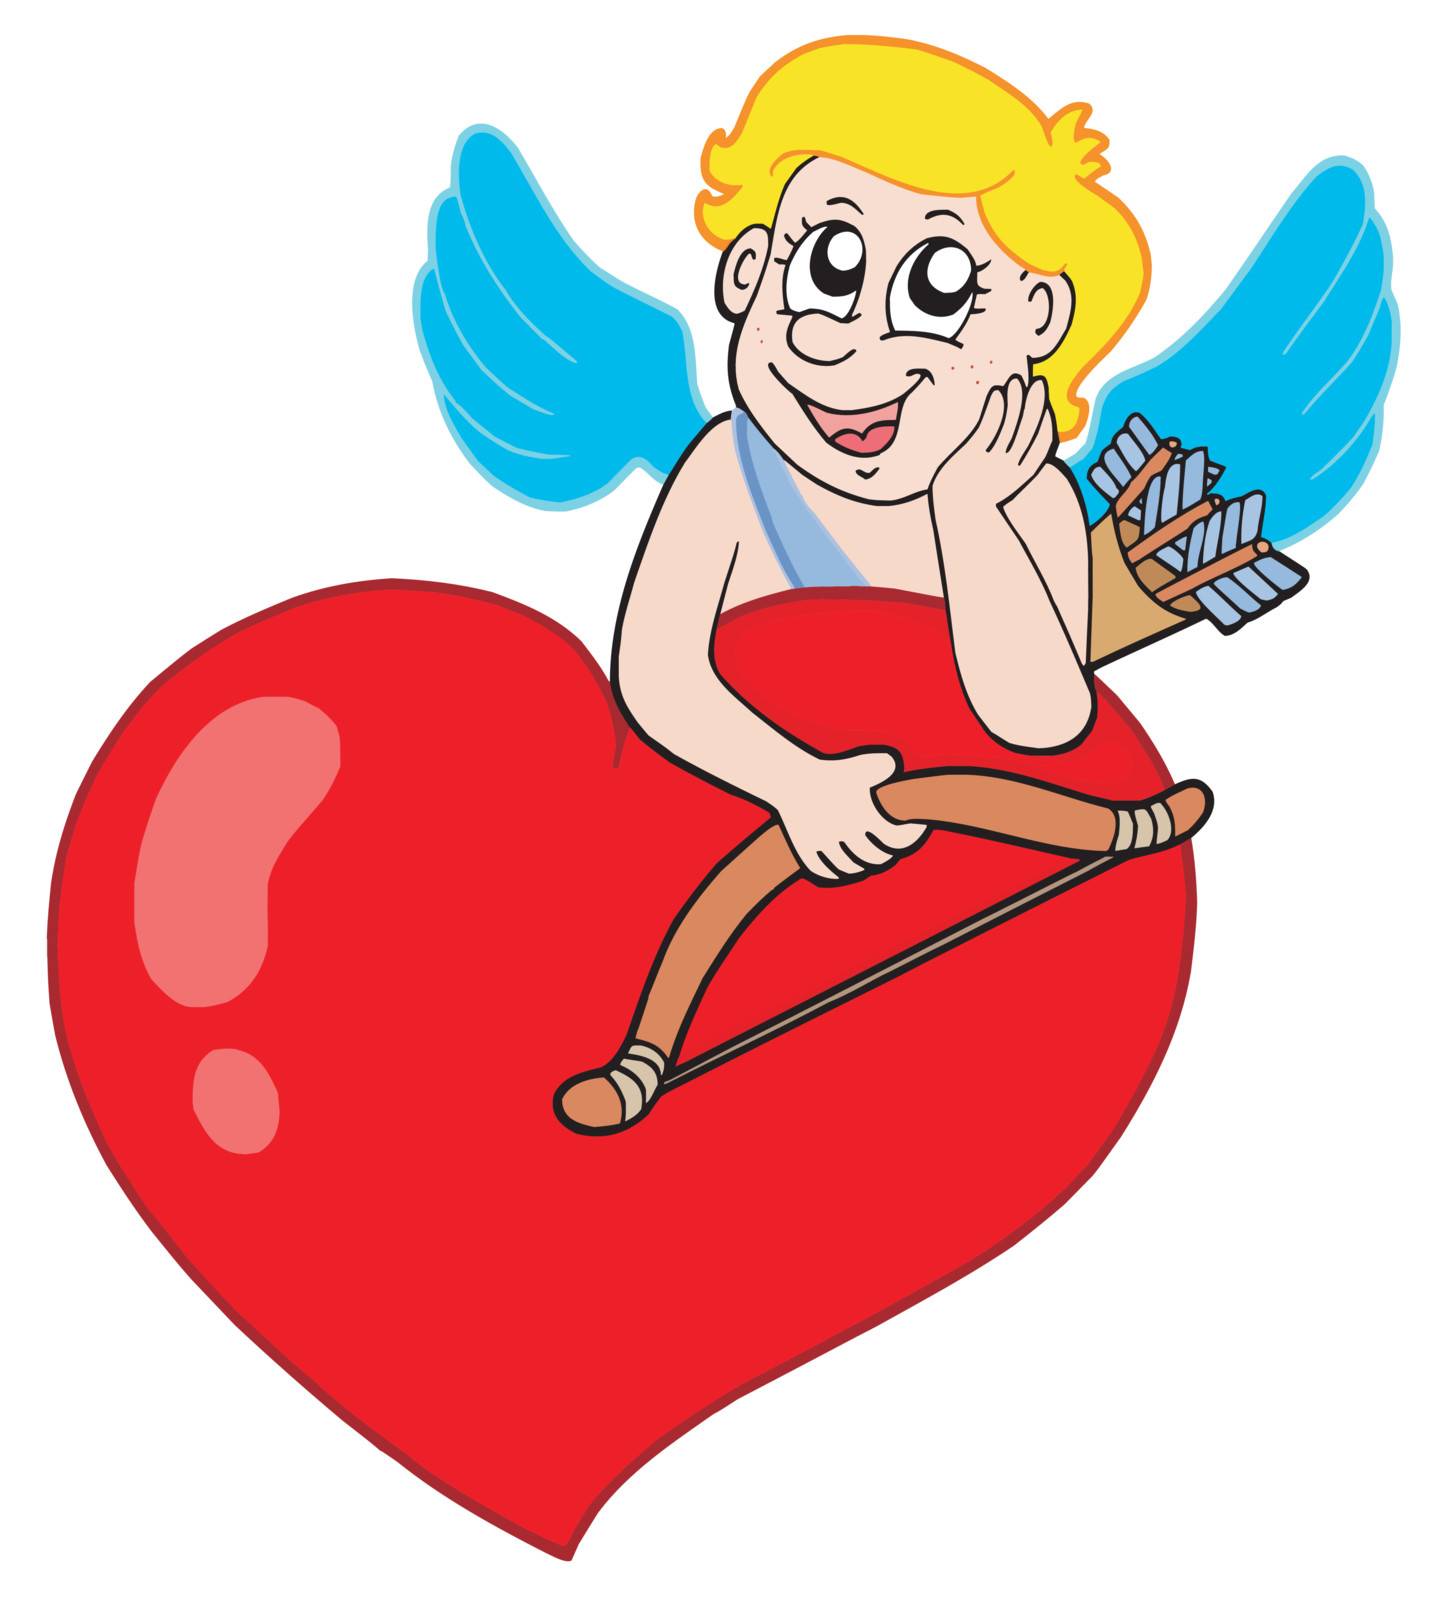 Cute cupid resting on heart - vector illustration.